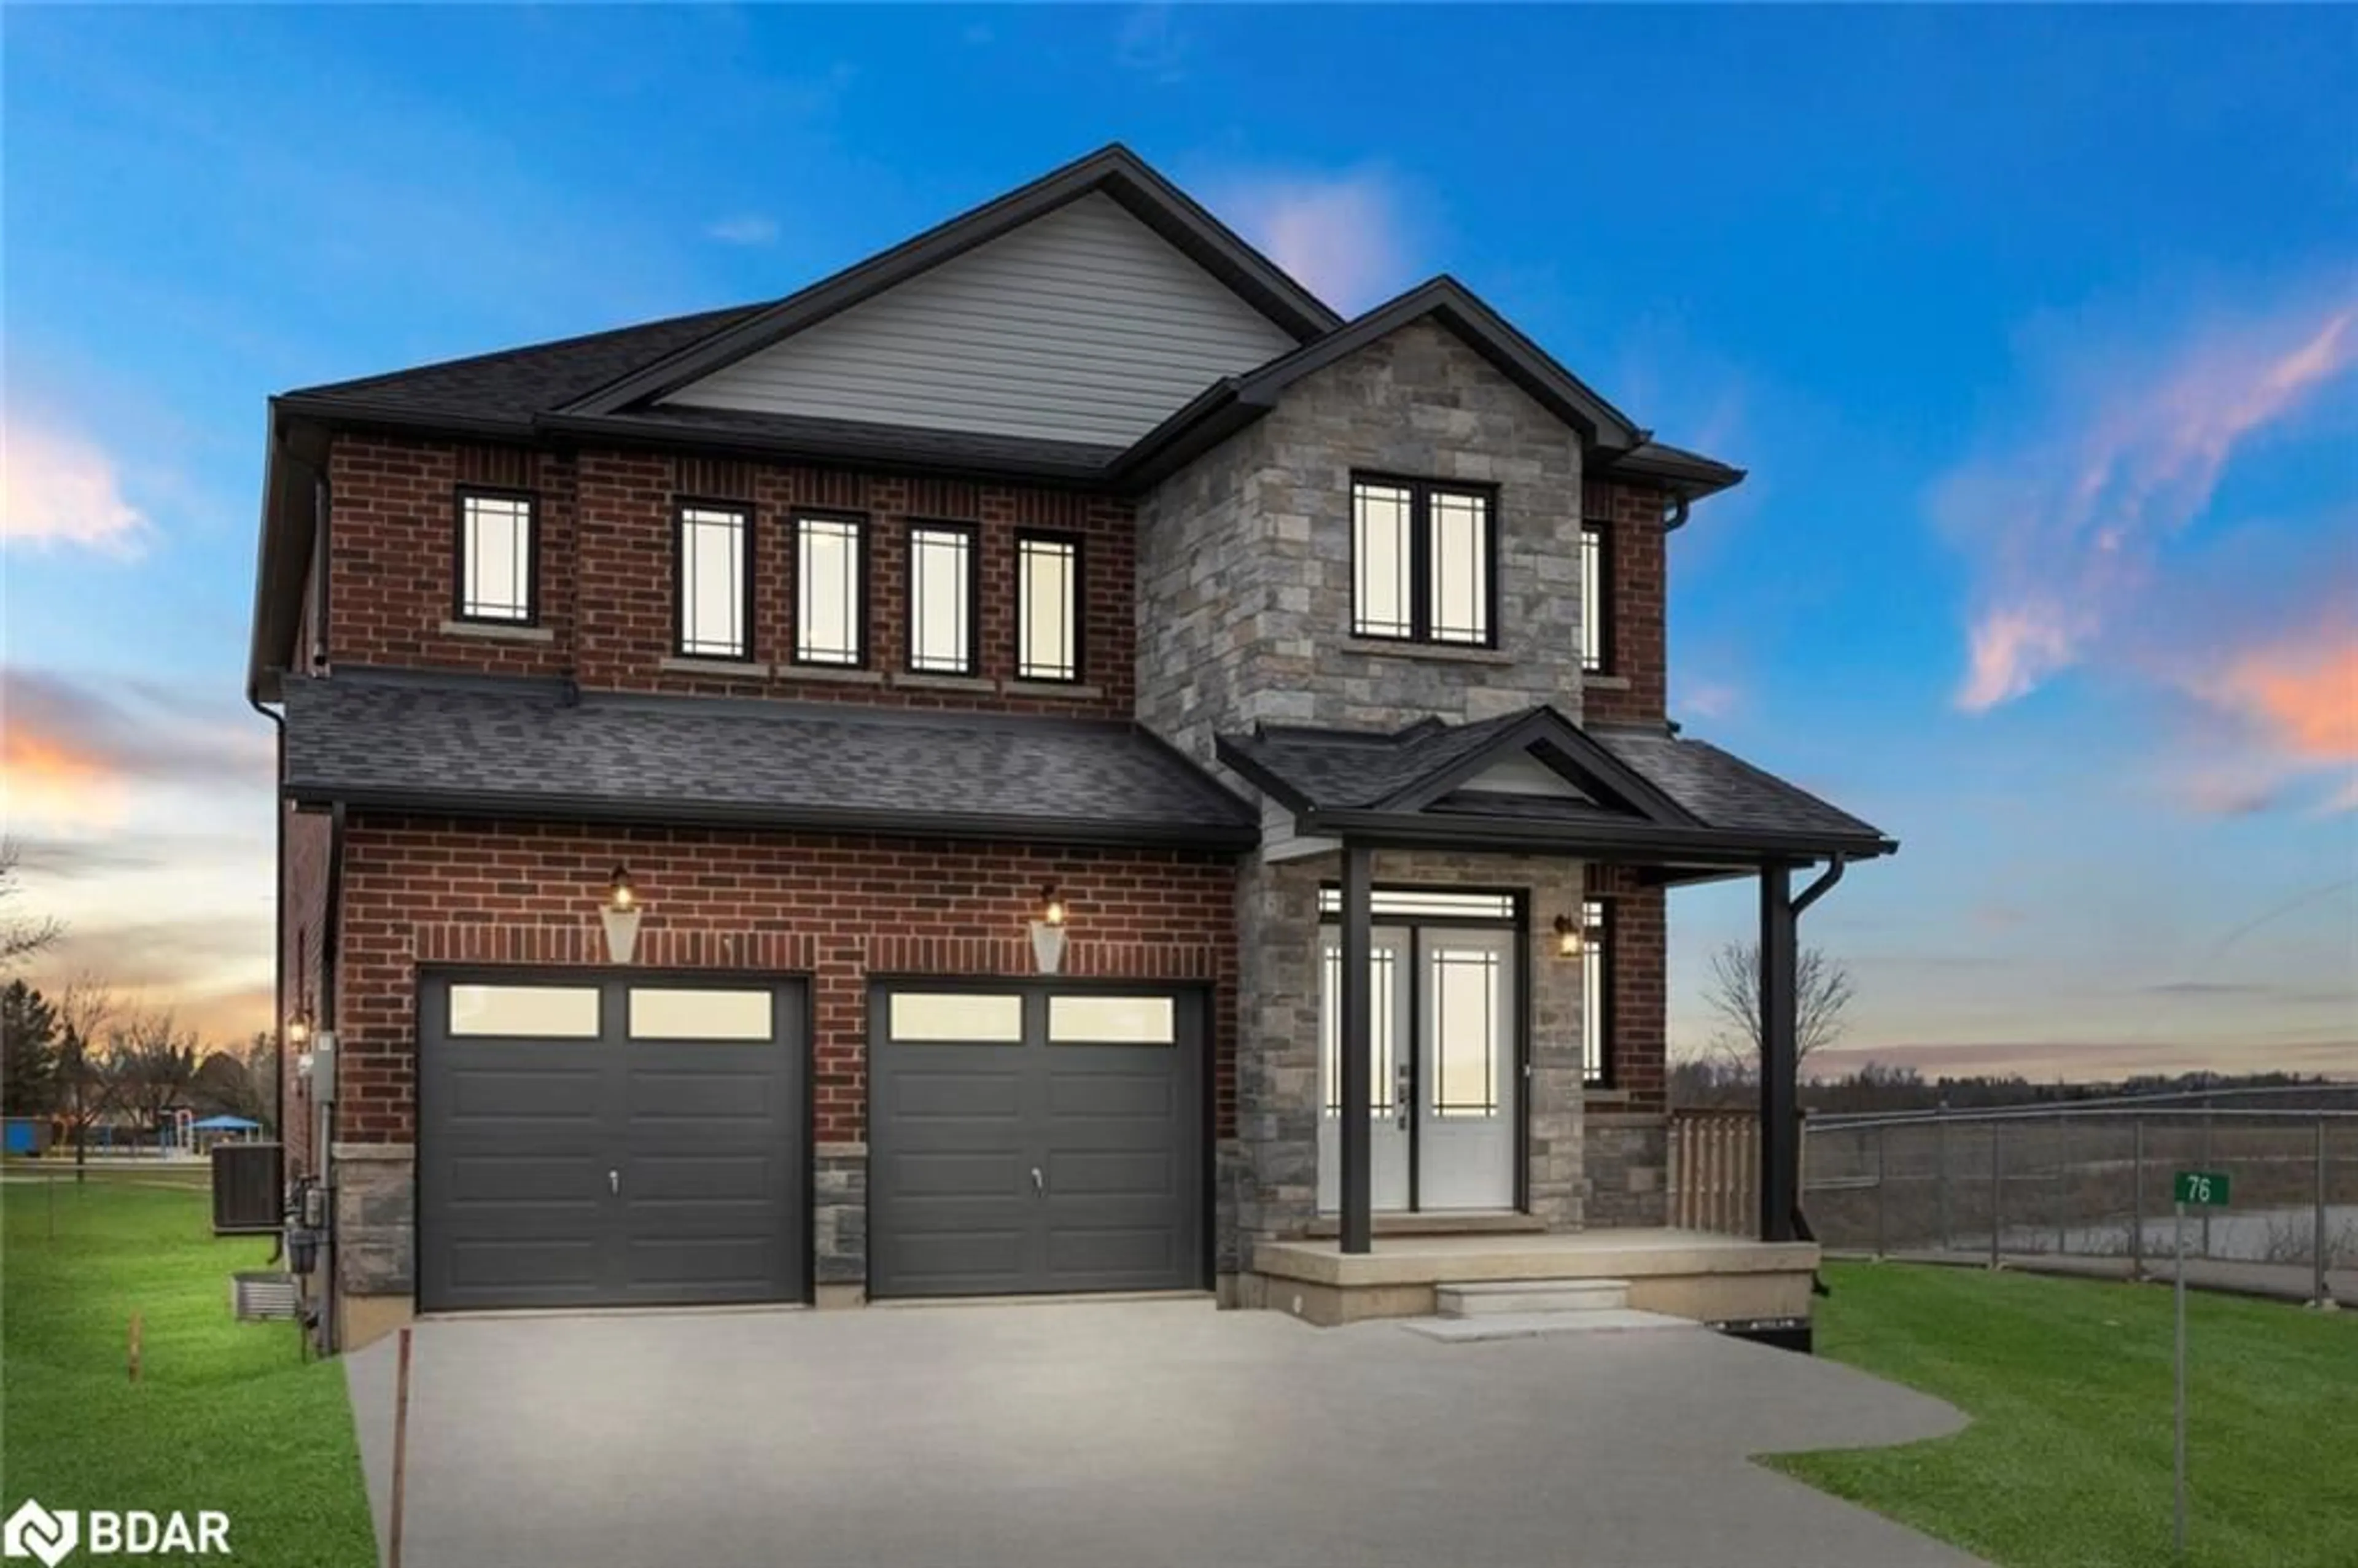 Home with brick exterior material for 76 Ritchie Crescent Cres, Elmvale Ontario L0L 1P0